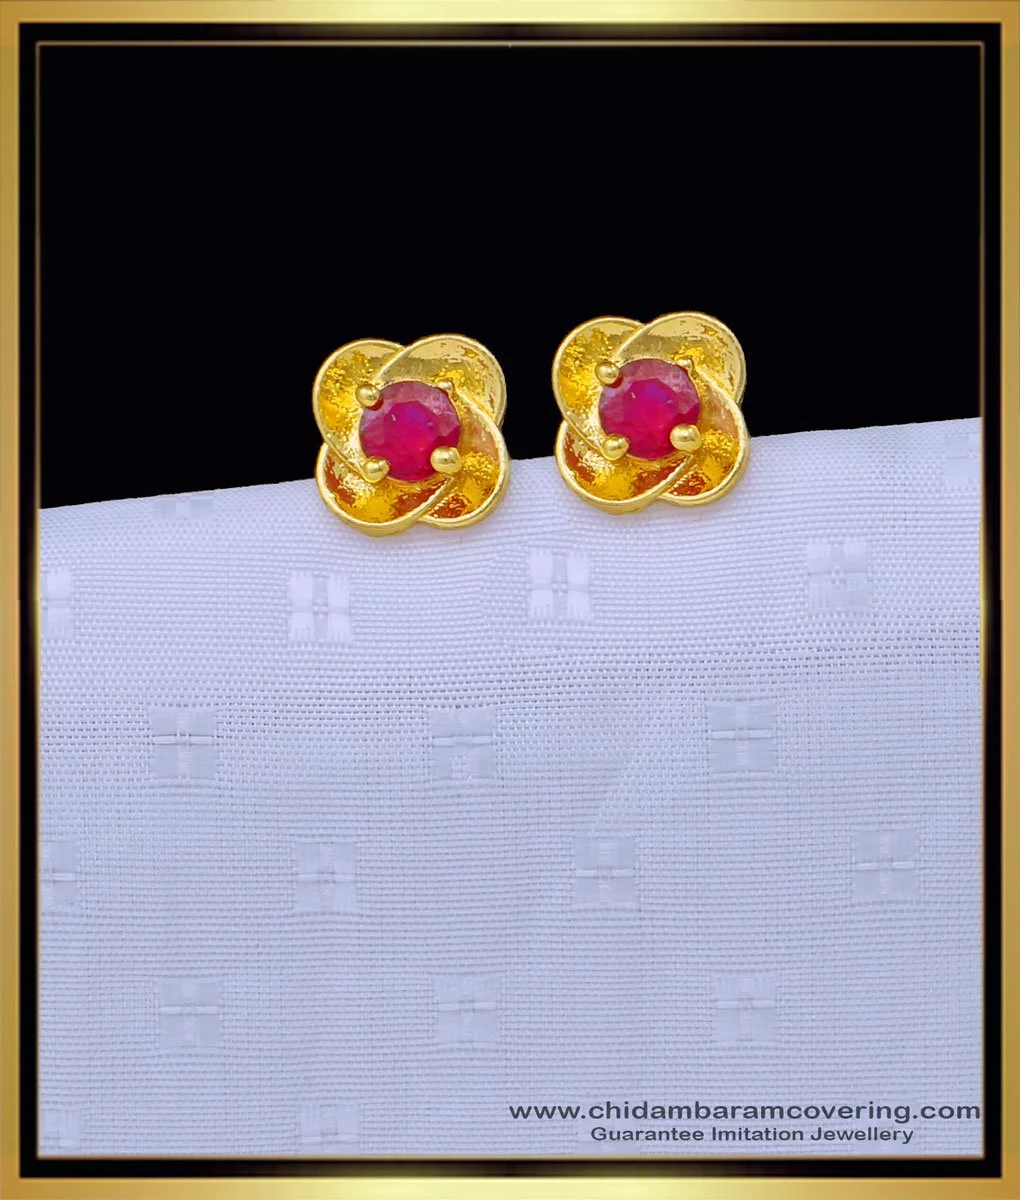 Share 116+ ruby earrings designs